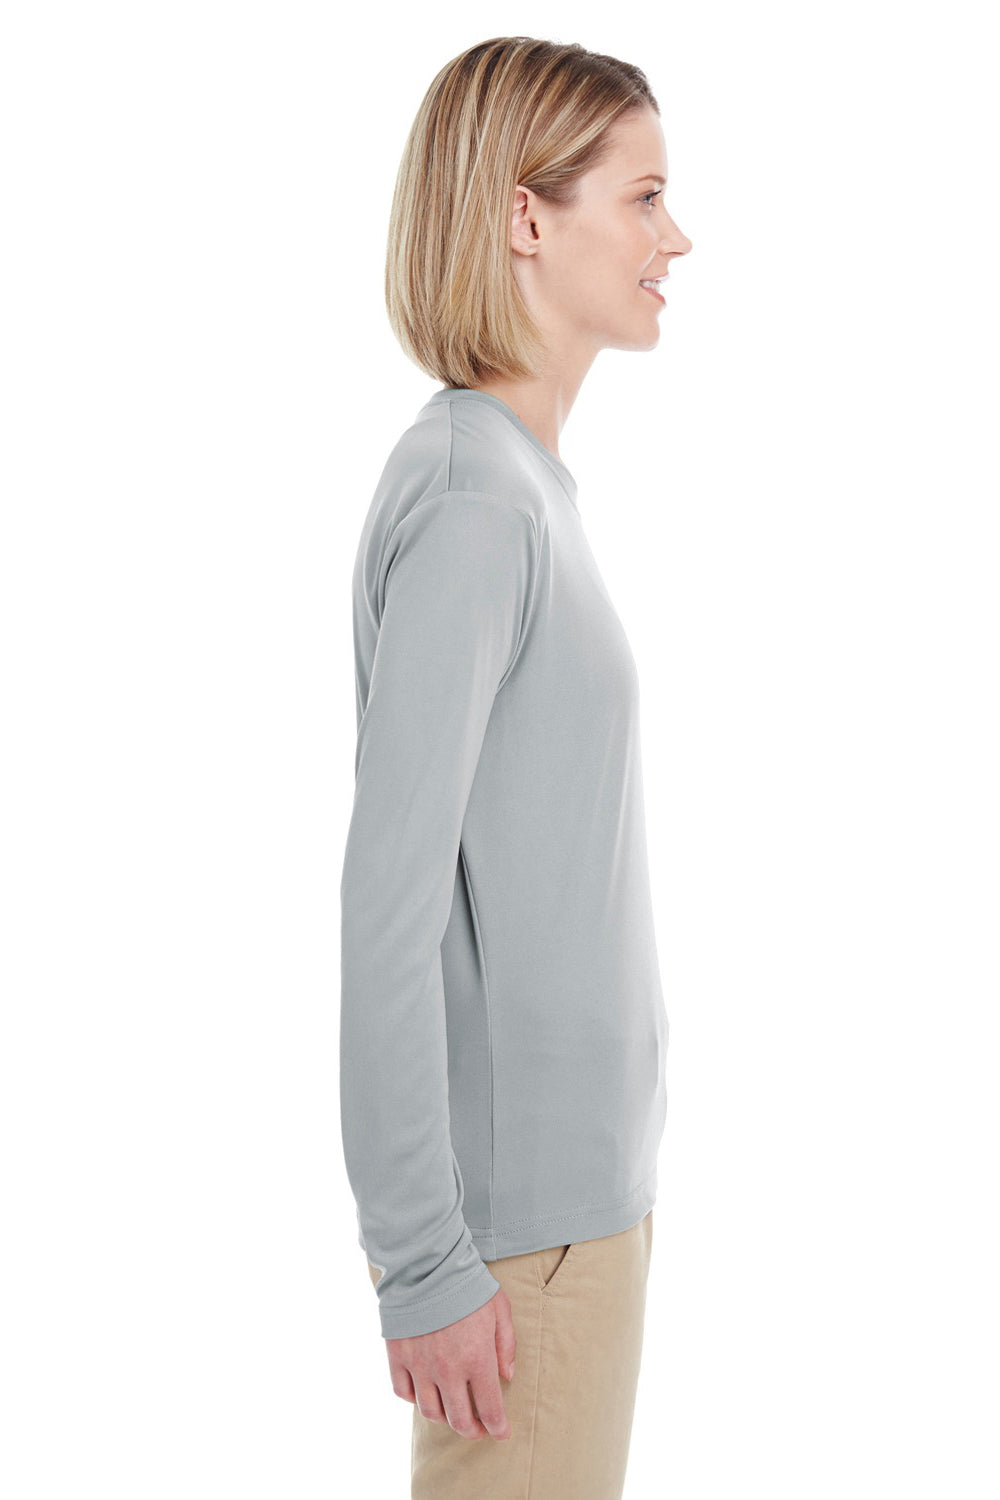 UltraClub 8622W Womens Cool & Dry Performance Moisture Wicking Long Sleeve Crewneck T-Shirt Grey Side